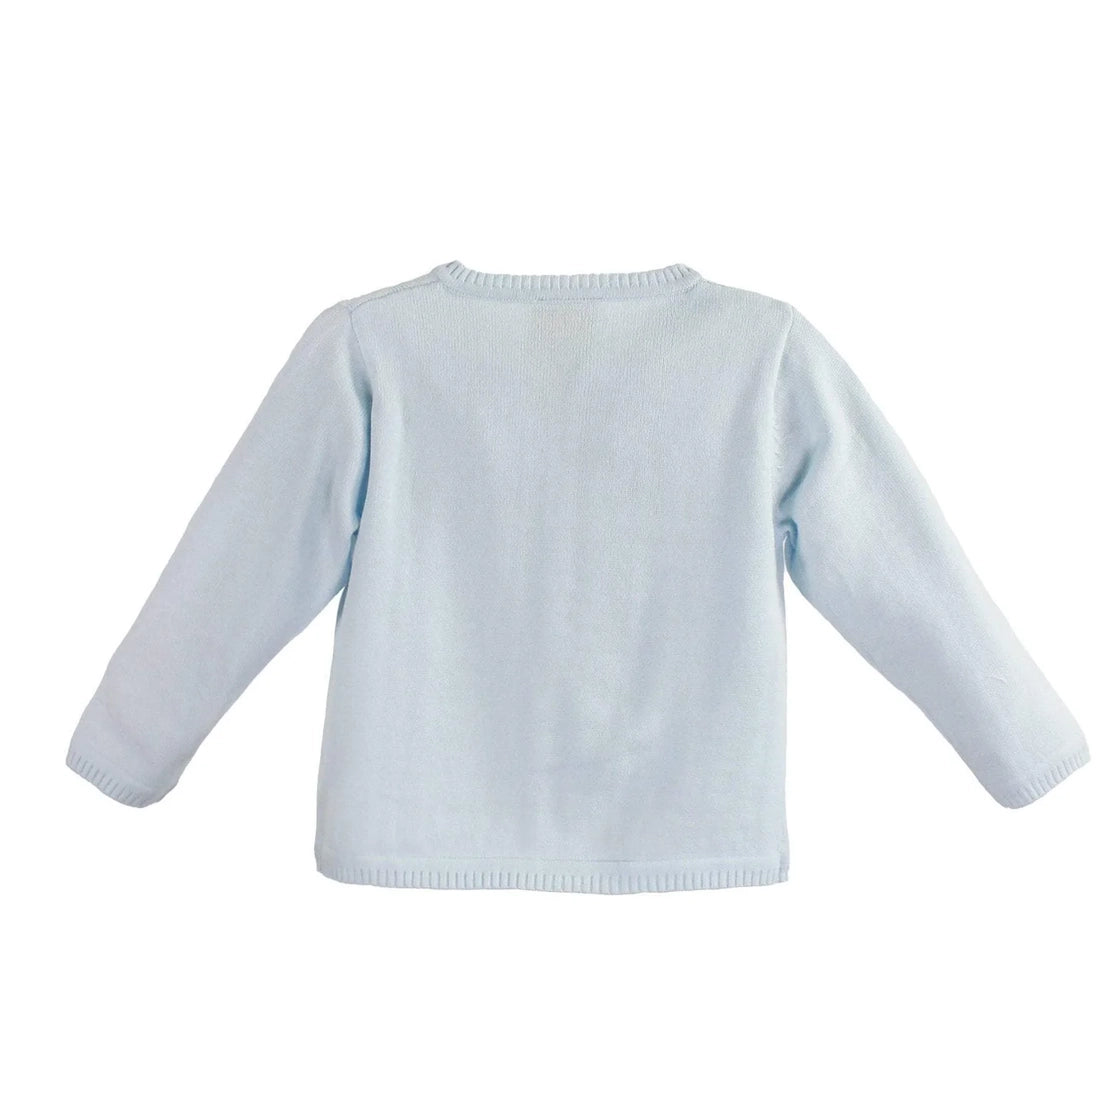 Ladder Edge Cardigan Sweater in Blue  - Doodlebug's Children's Boutique